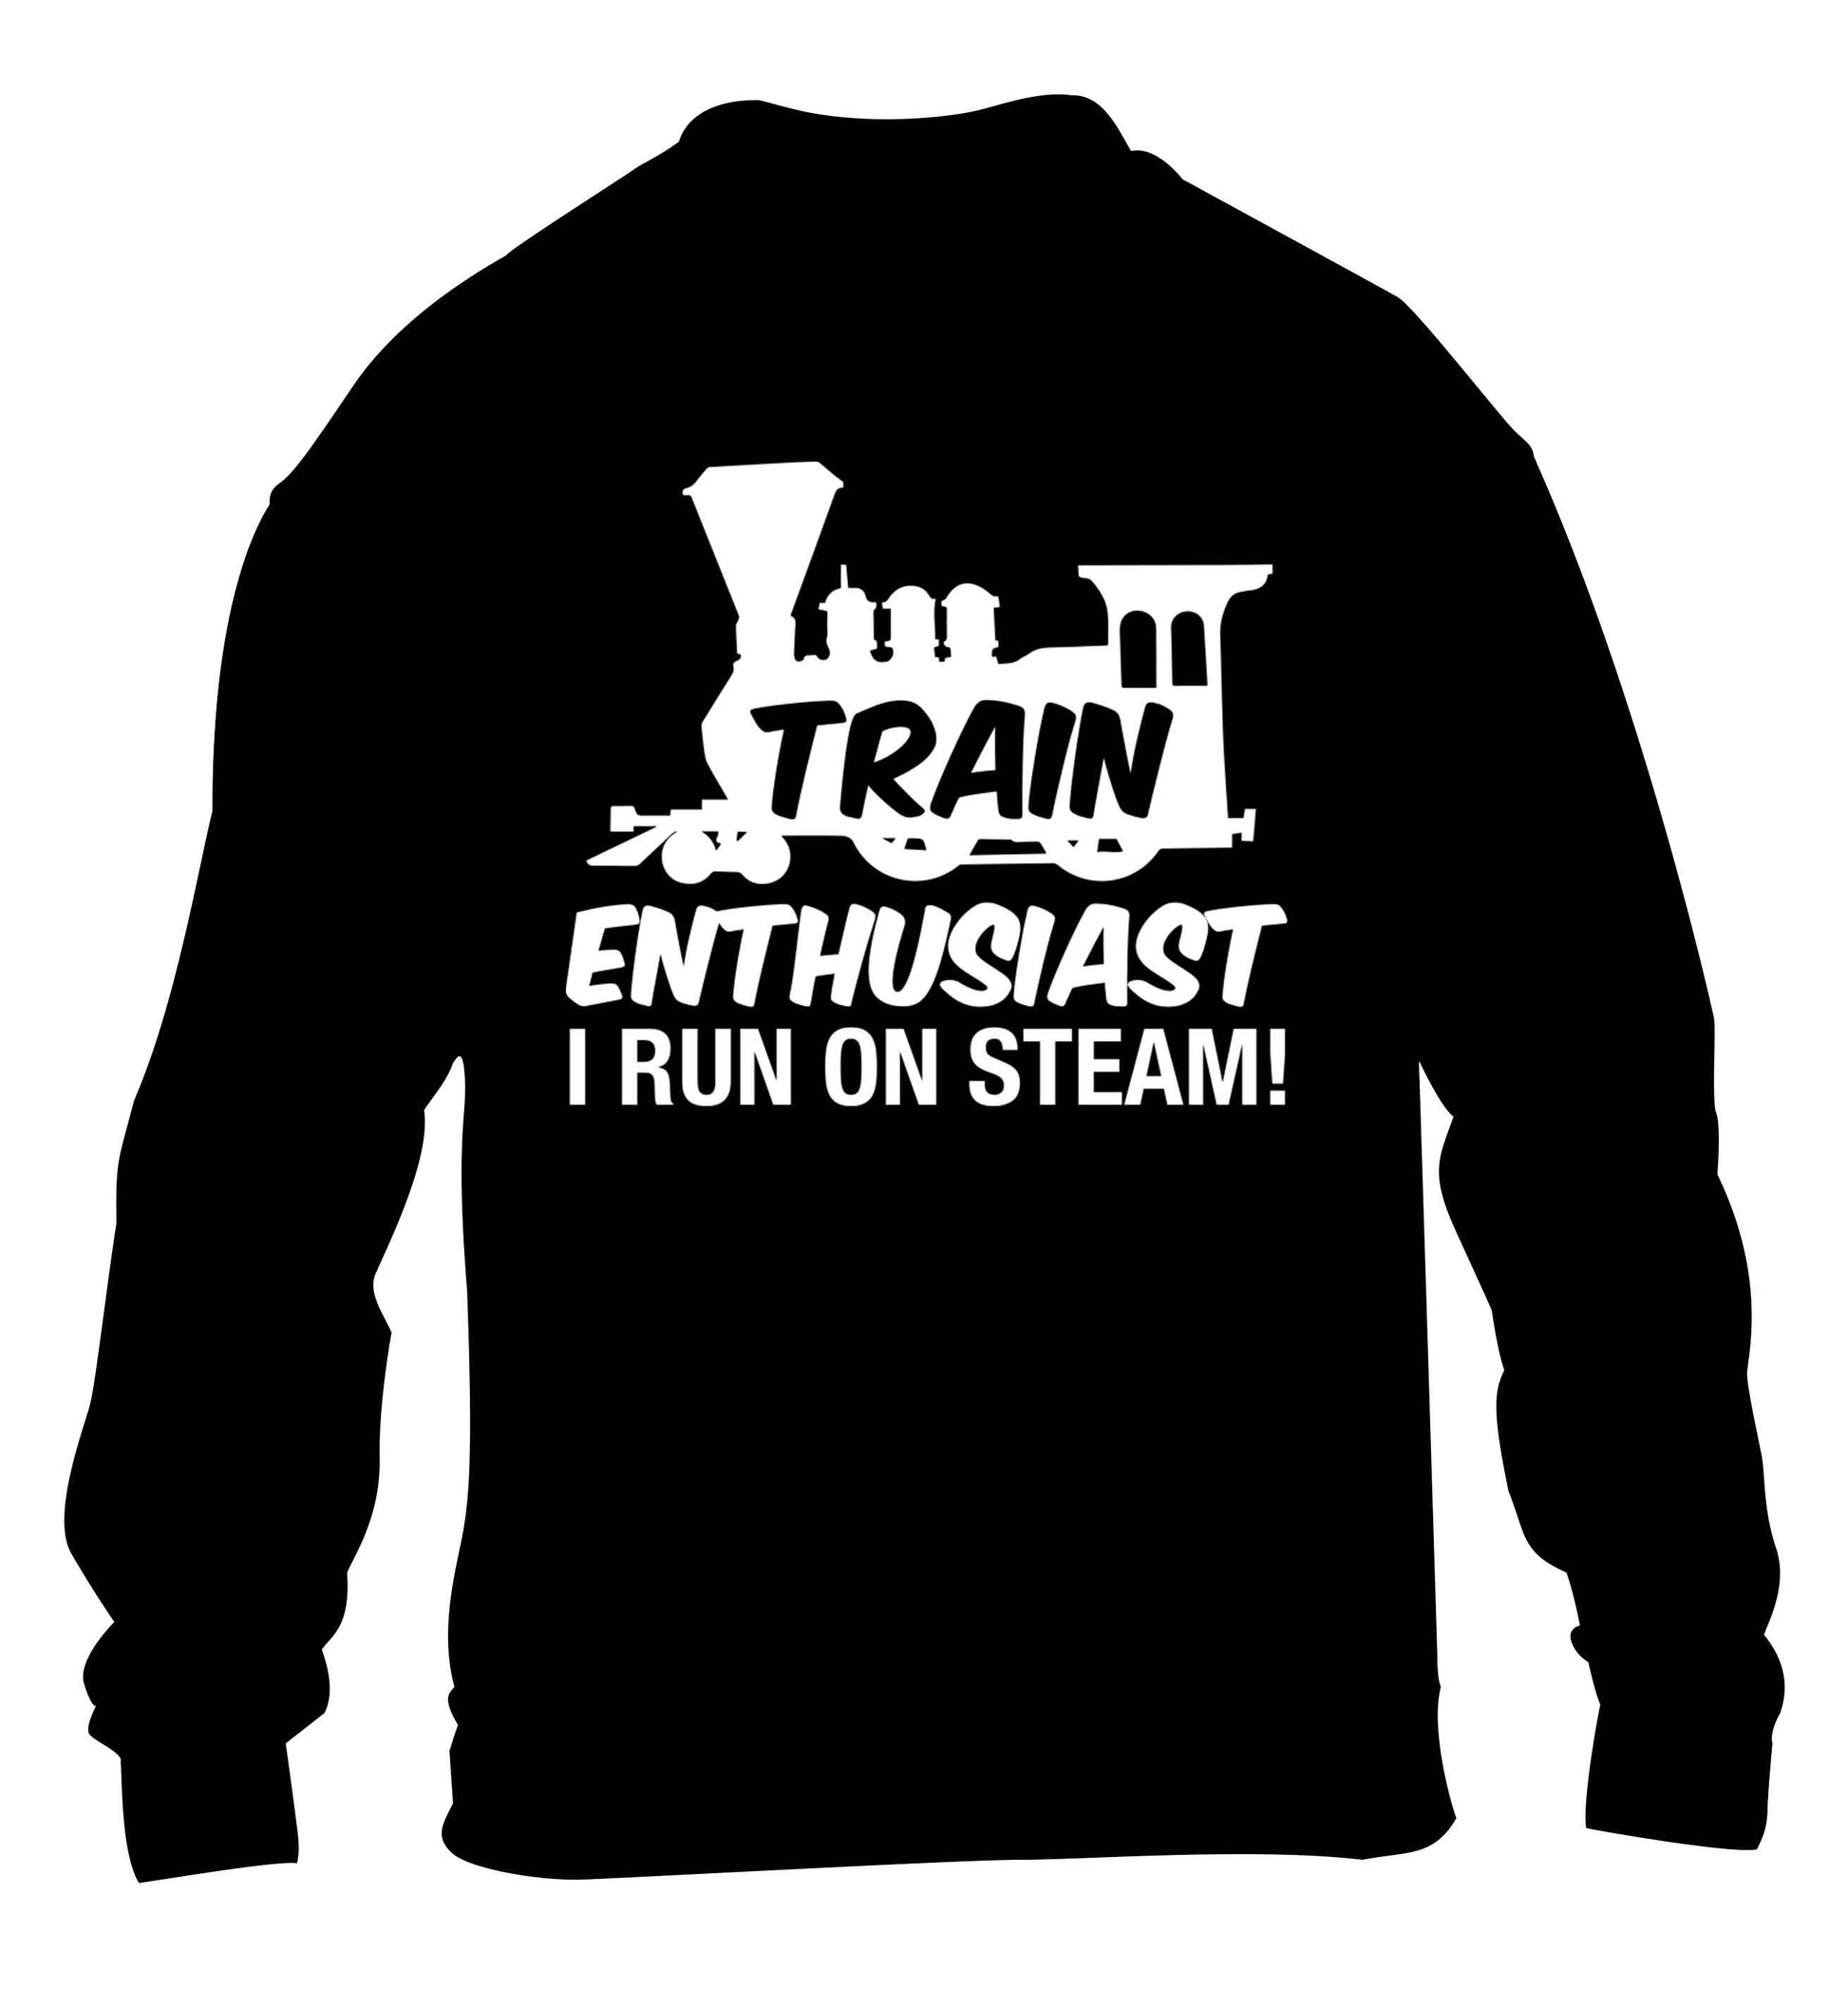 Train enthusiast I run on steam children's black sweater 12-13 Years